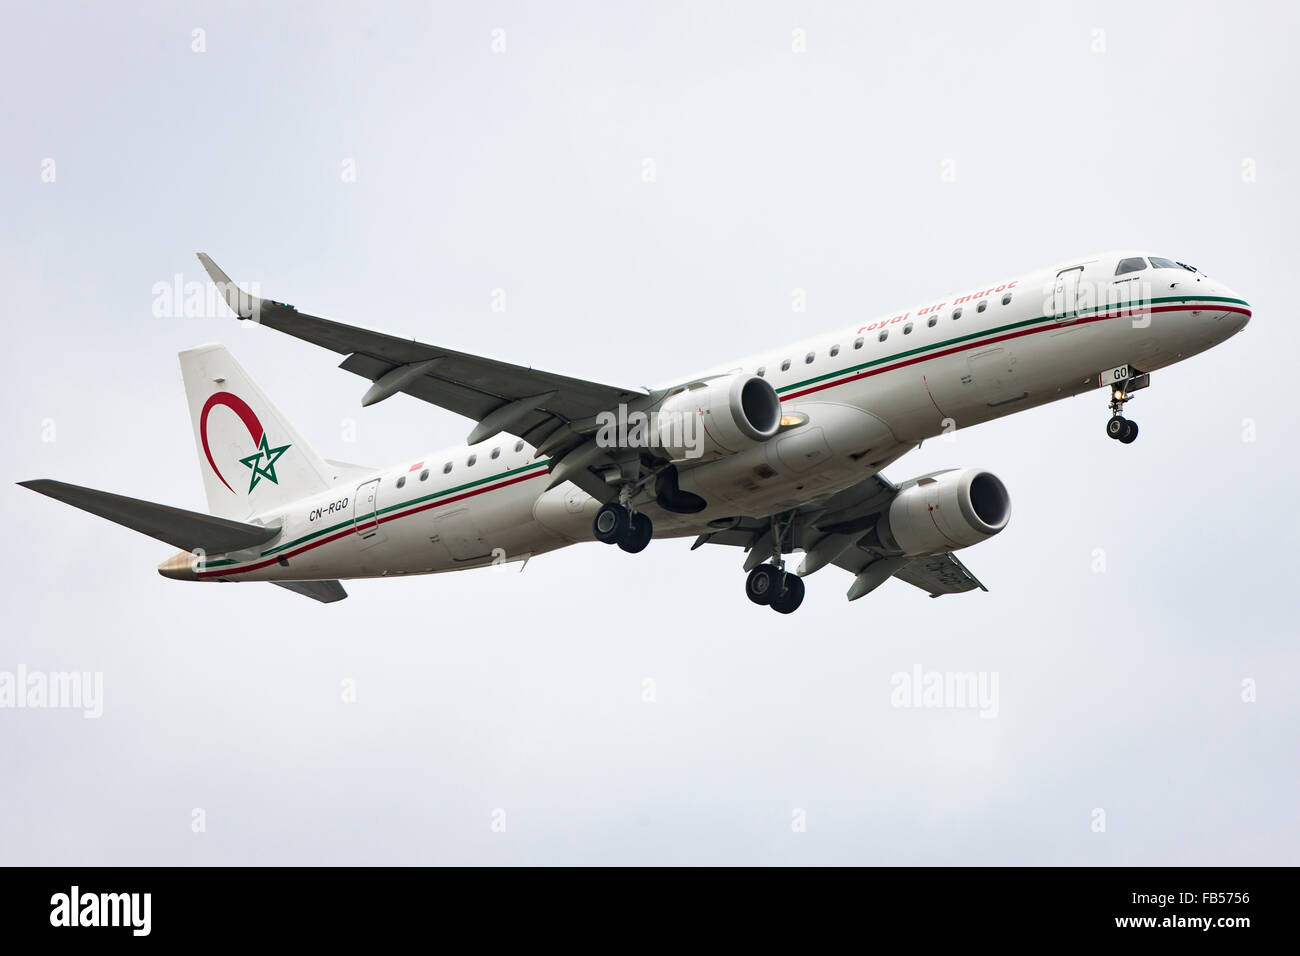 Royal Air Maroc Airliner Stock Photo